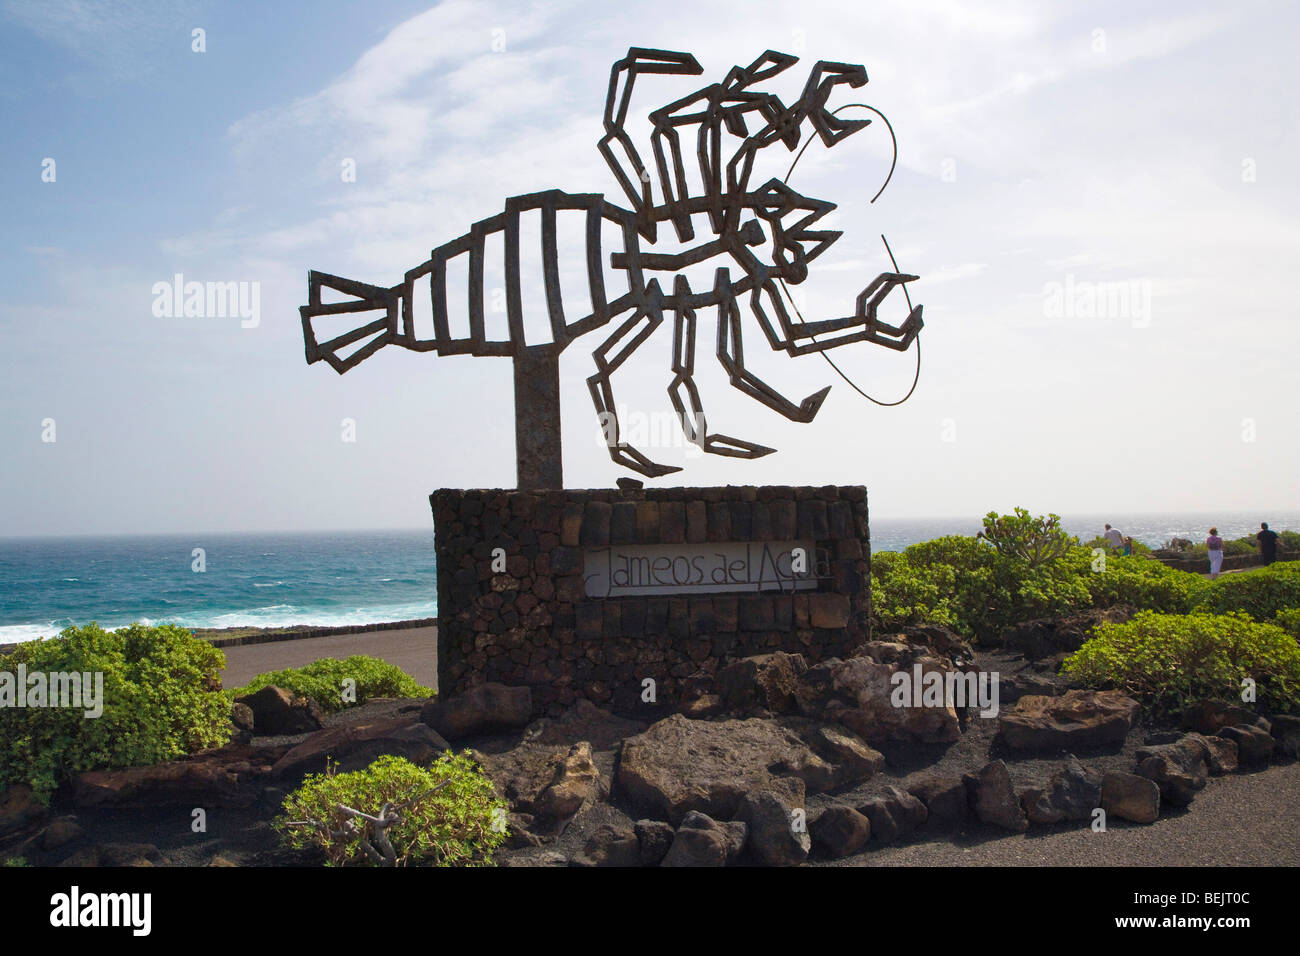 Sculpture of a crab designed by Cezar Manrique at Jameos del Agua, Lanzarote, Canary Islands, Spain Stock Photo